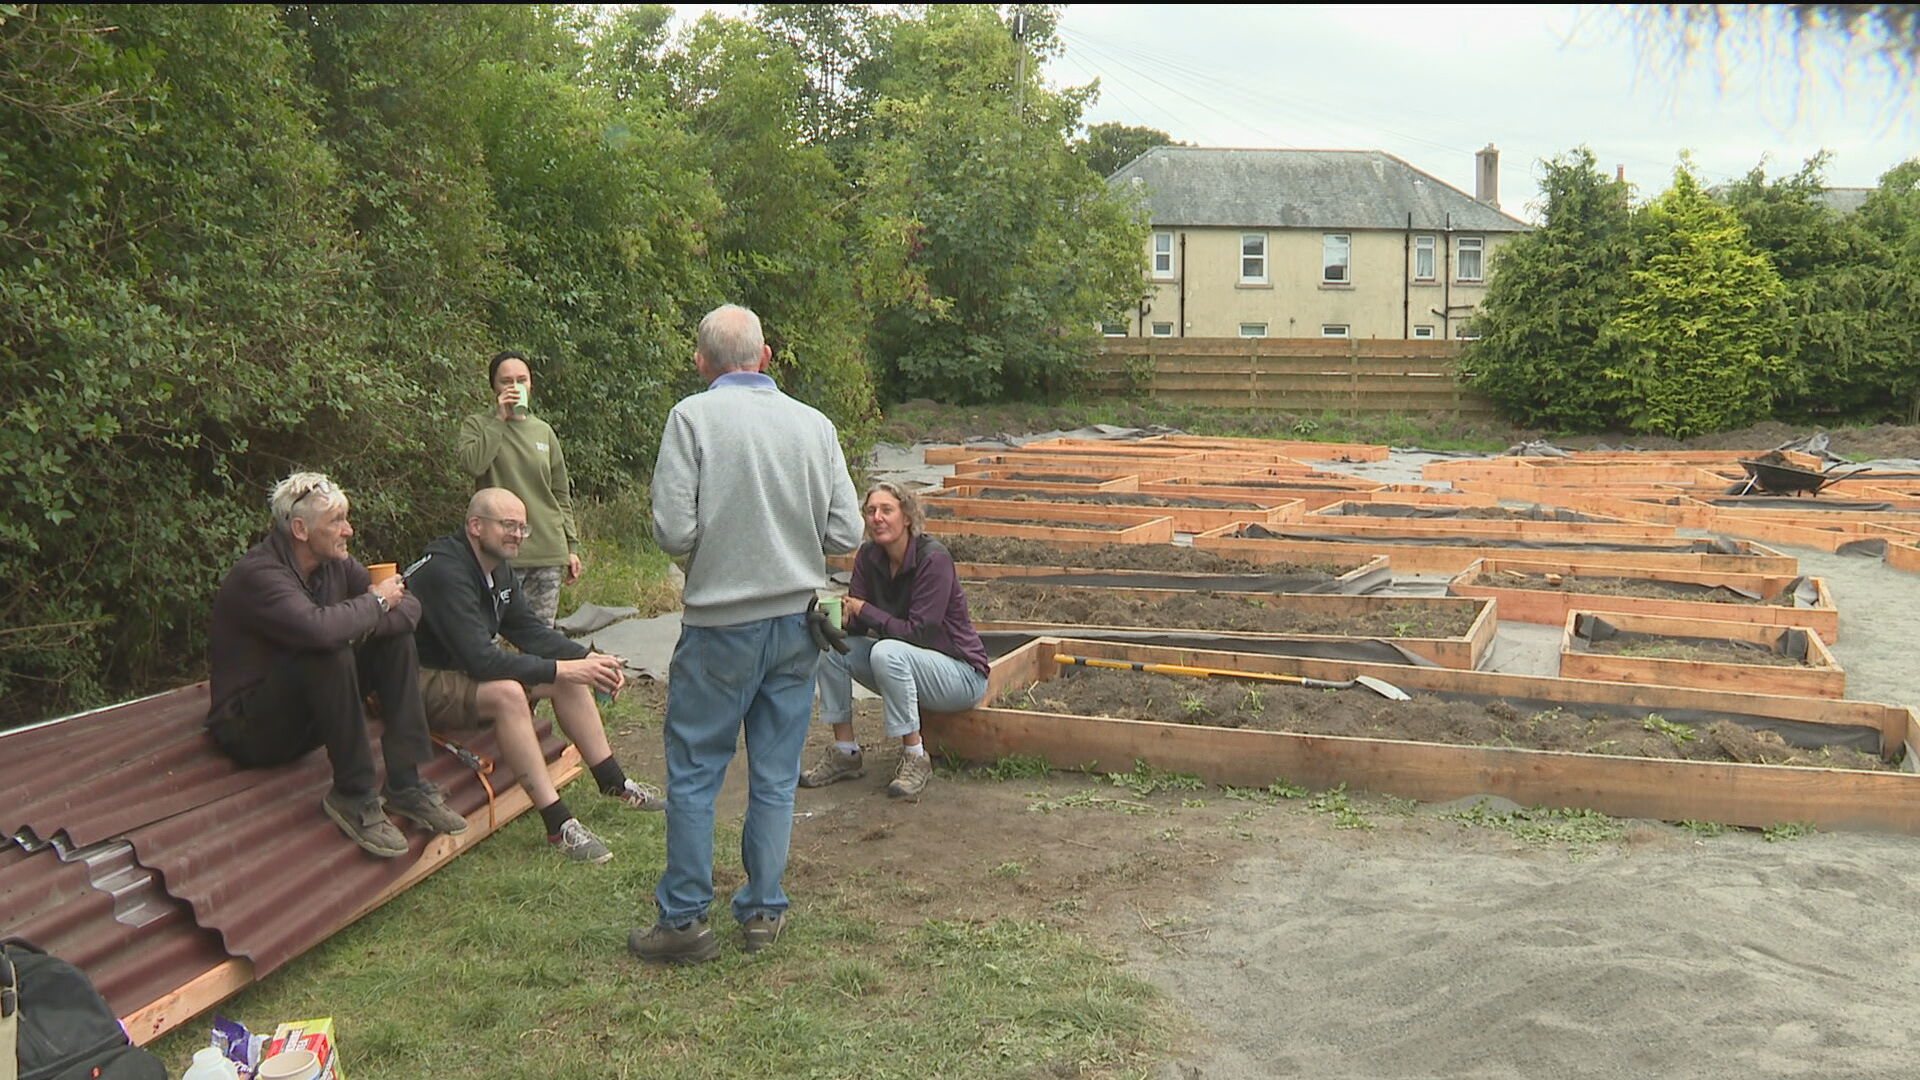 Edinburgh project turning unused spaces in community gardens